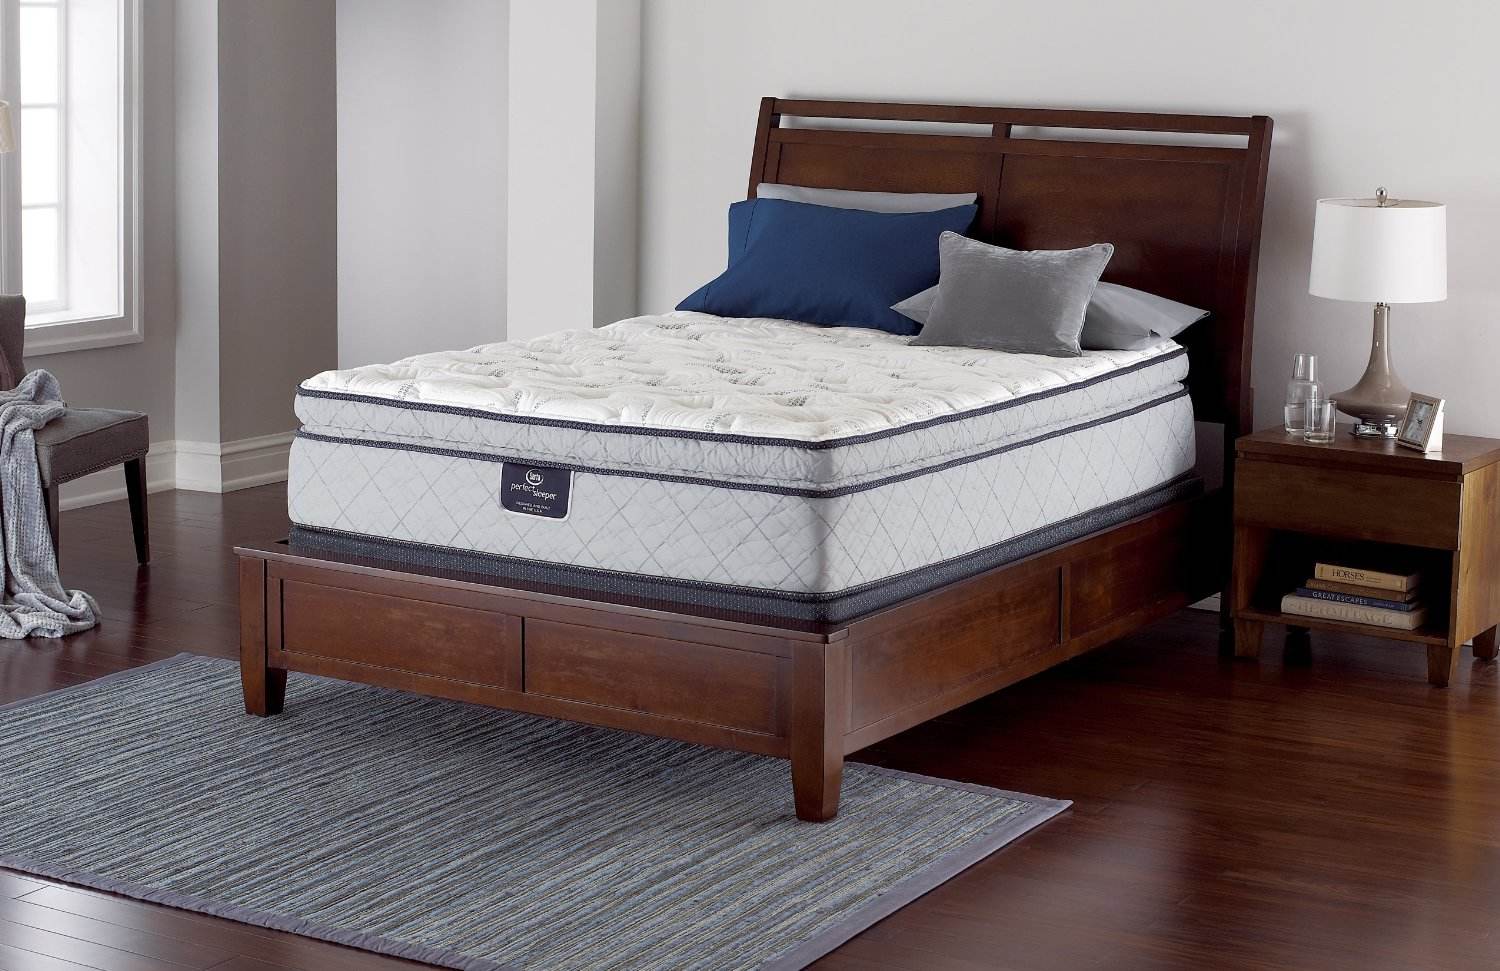 serta perfect sleeper bamboo cupertino mattress